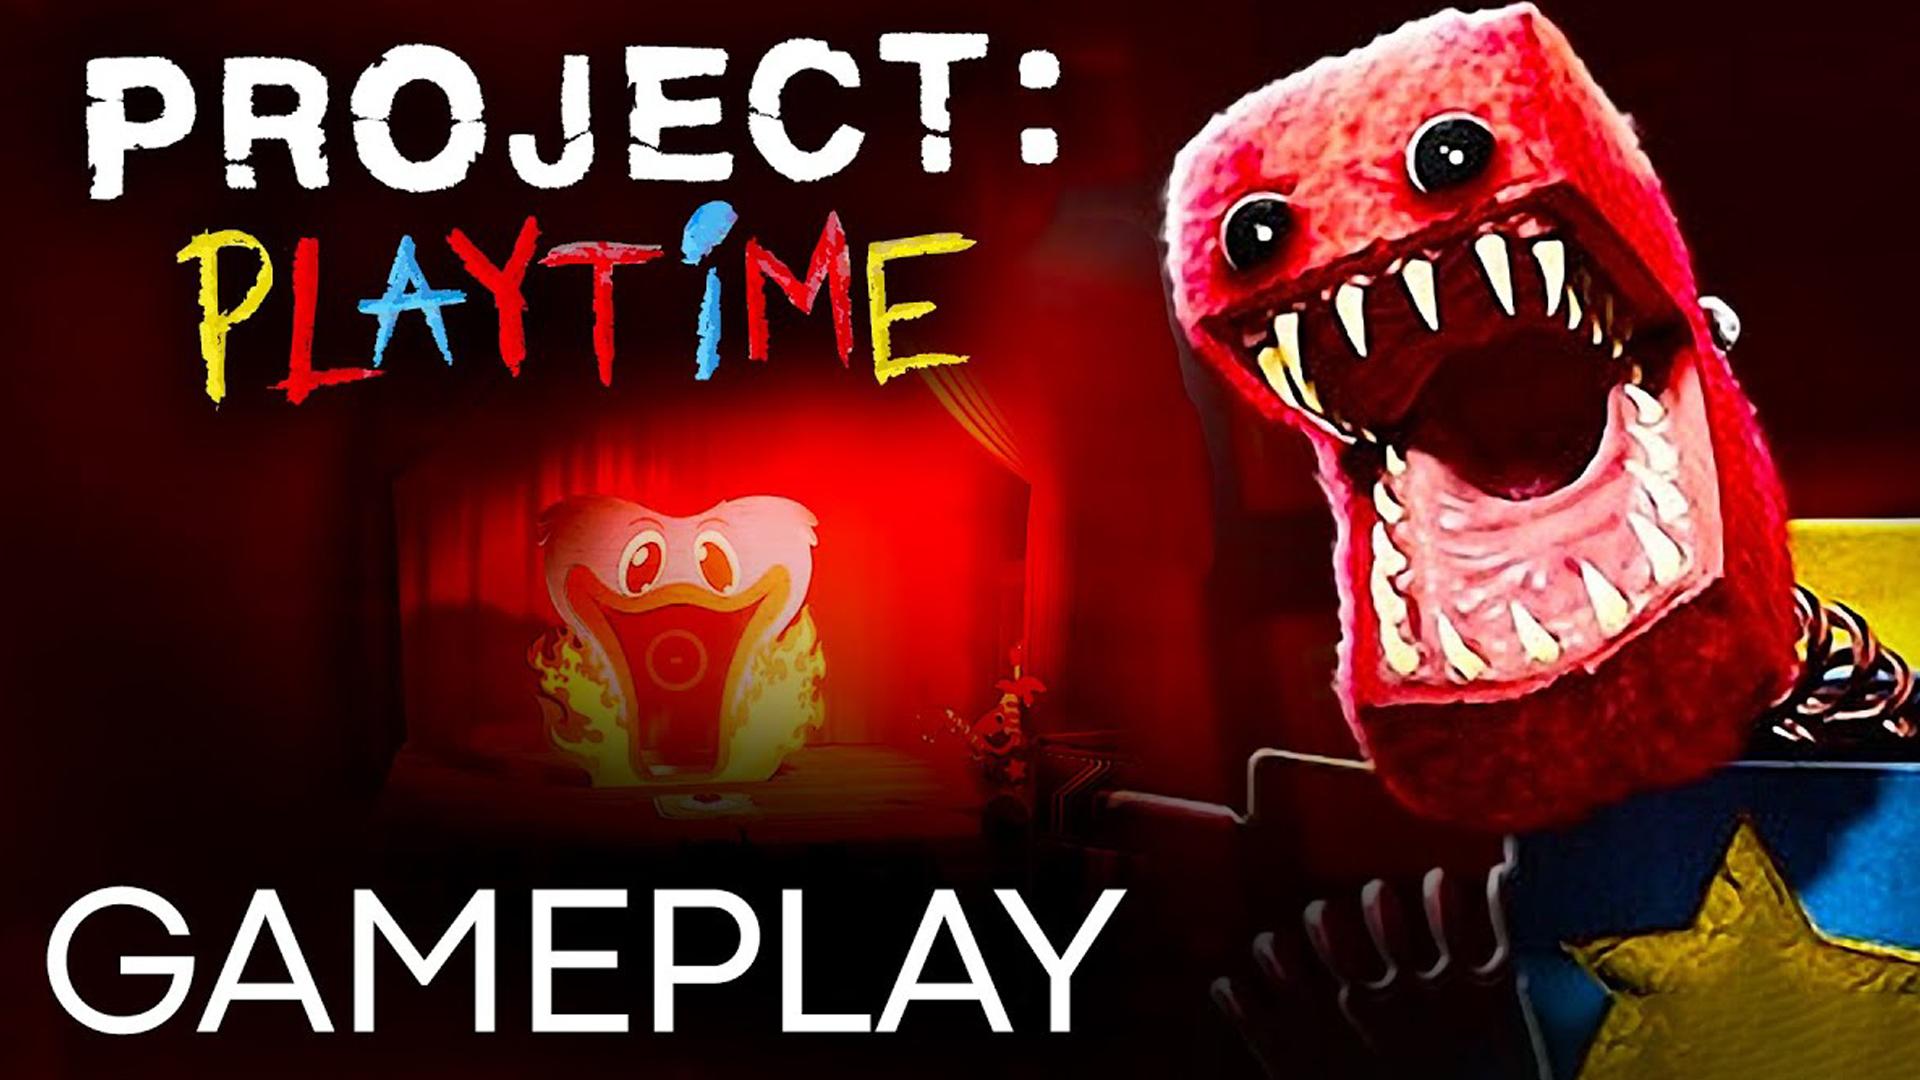 Поппи плейтайм игра 3 часть. Проджект Плейтайм. Poppy Playtime Project. Poppy Playtime Project Playtime. Project Poppy Play time.